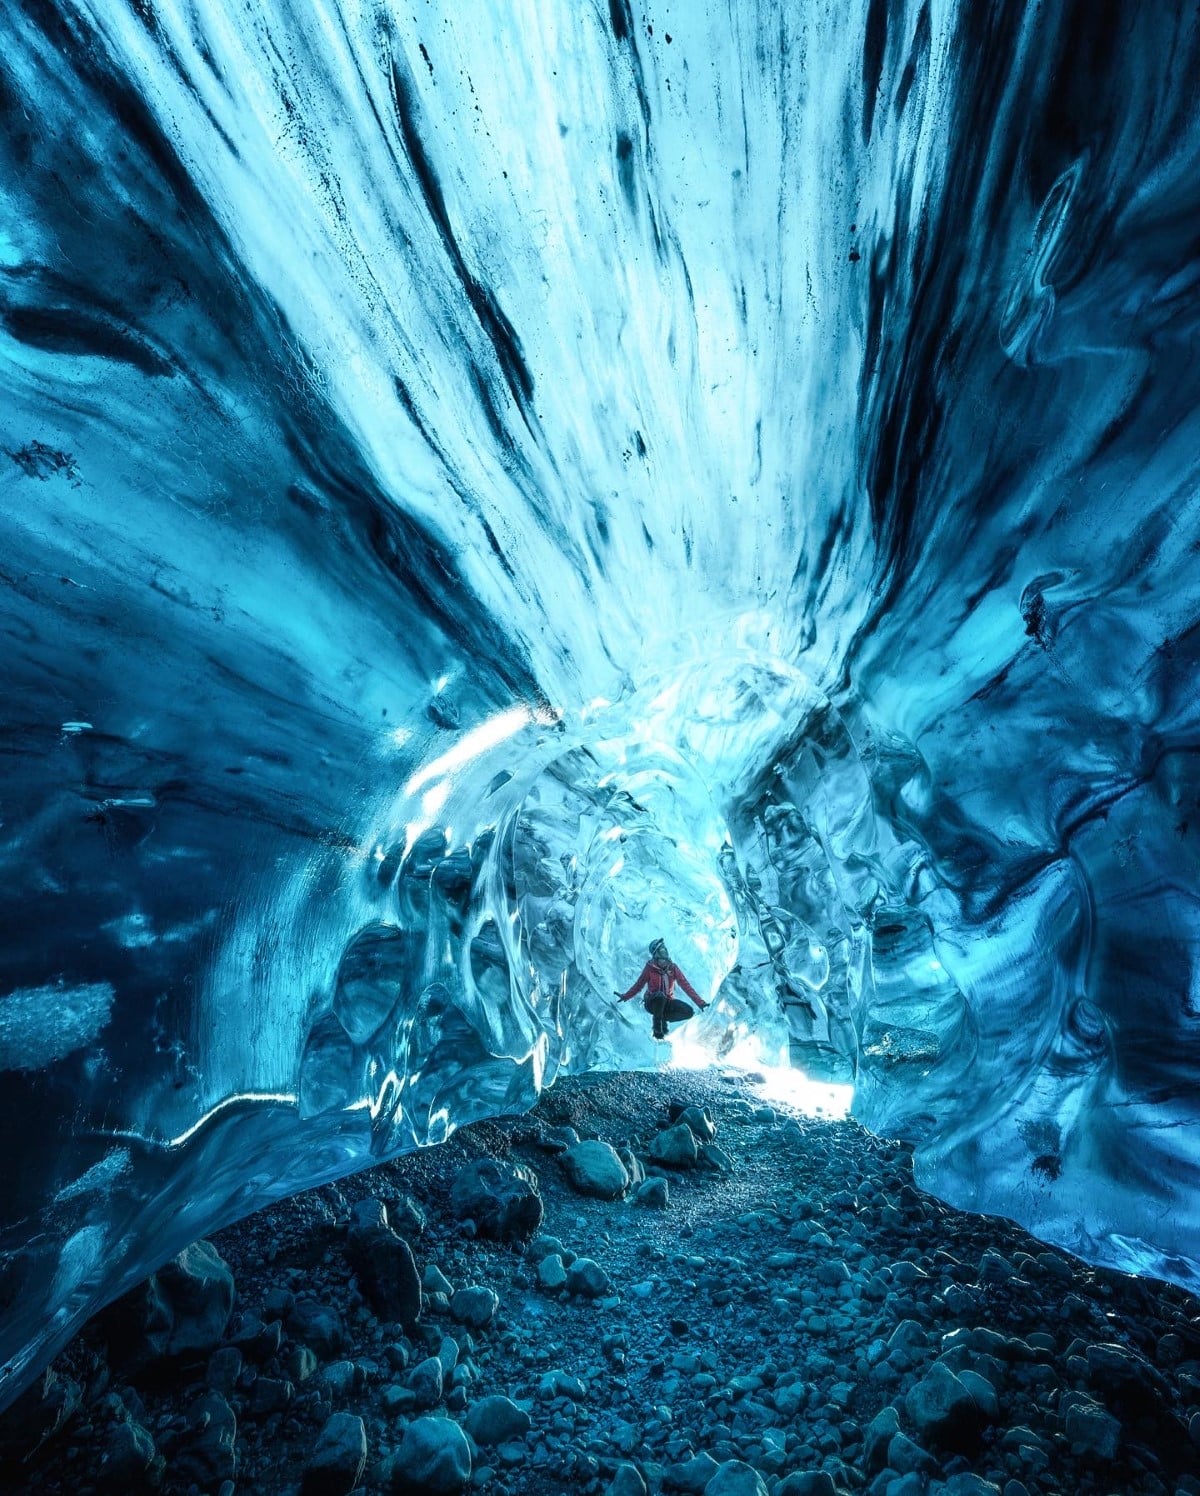 Iceland Ice Caves by Ryan Newburn